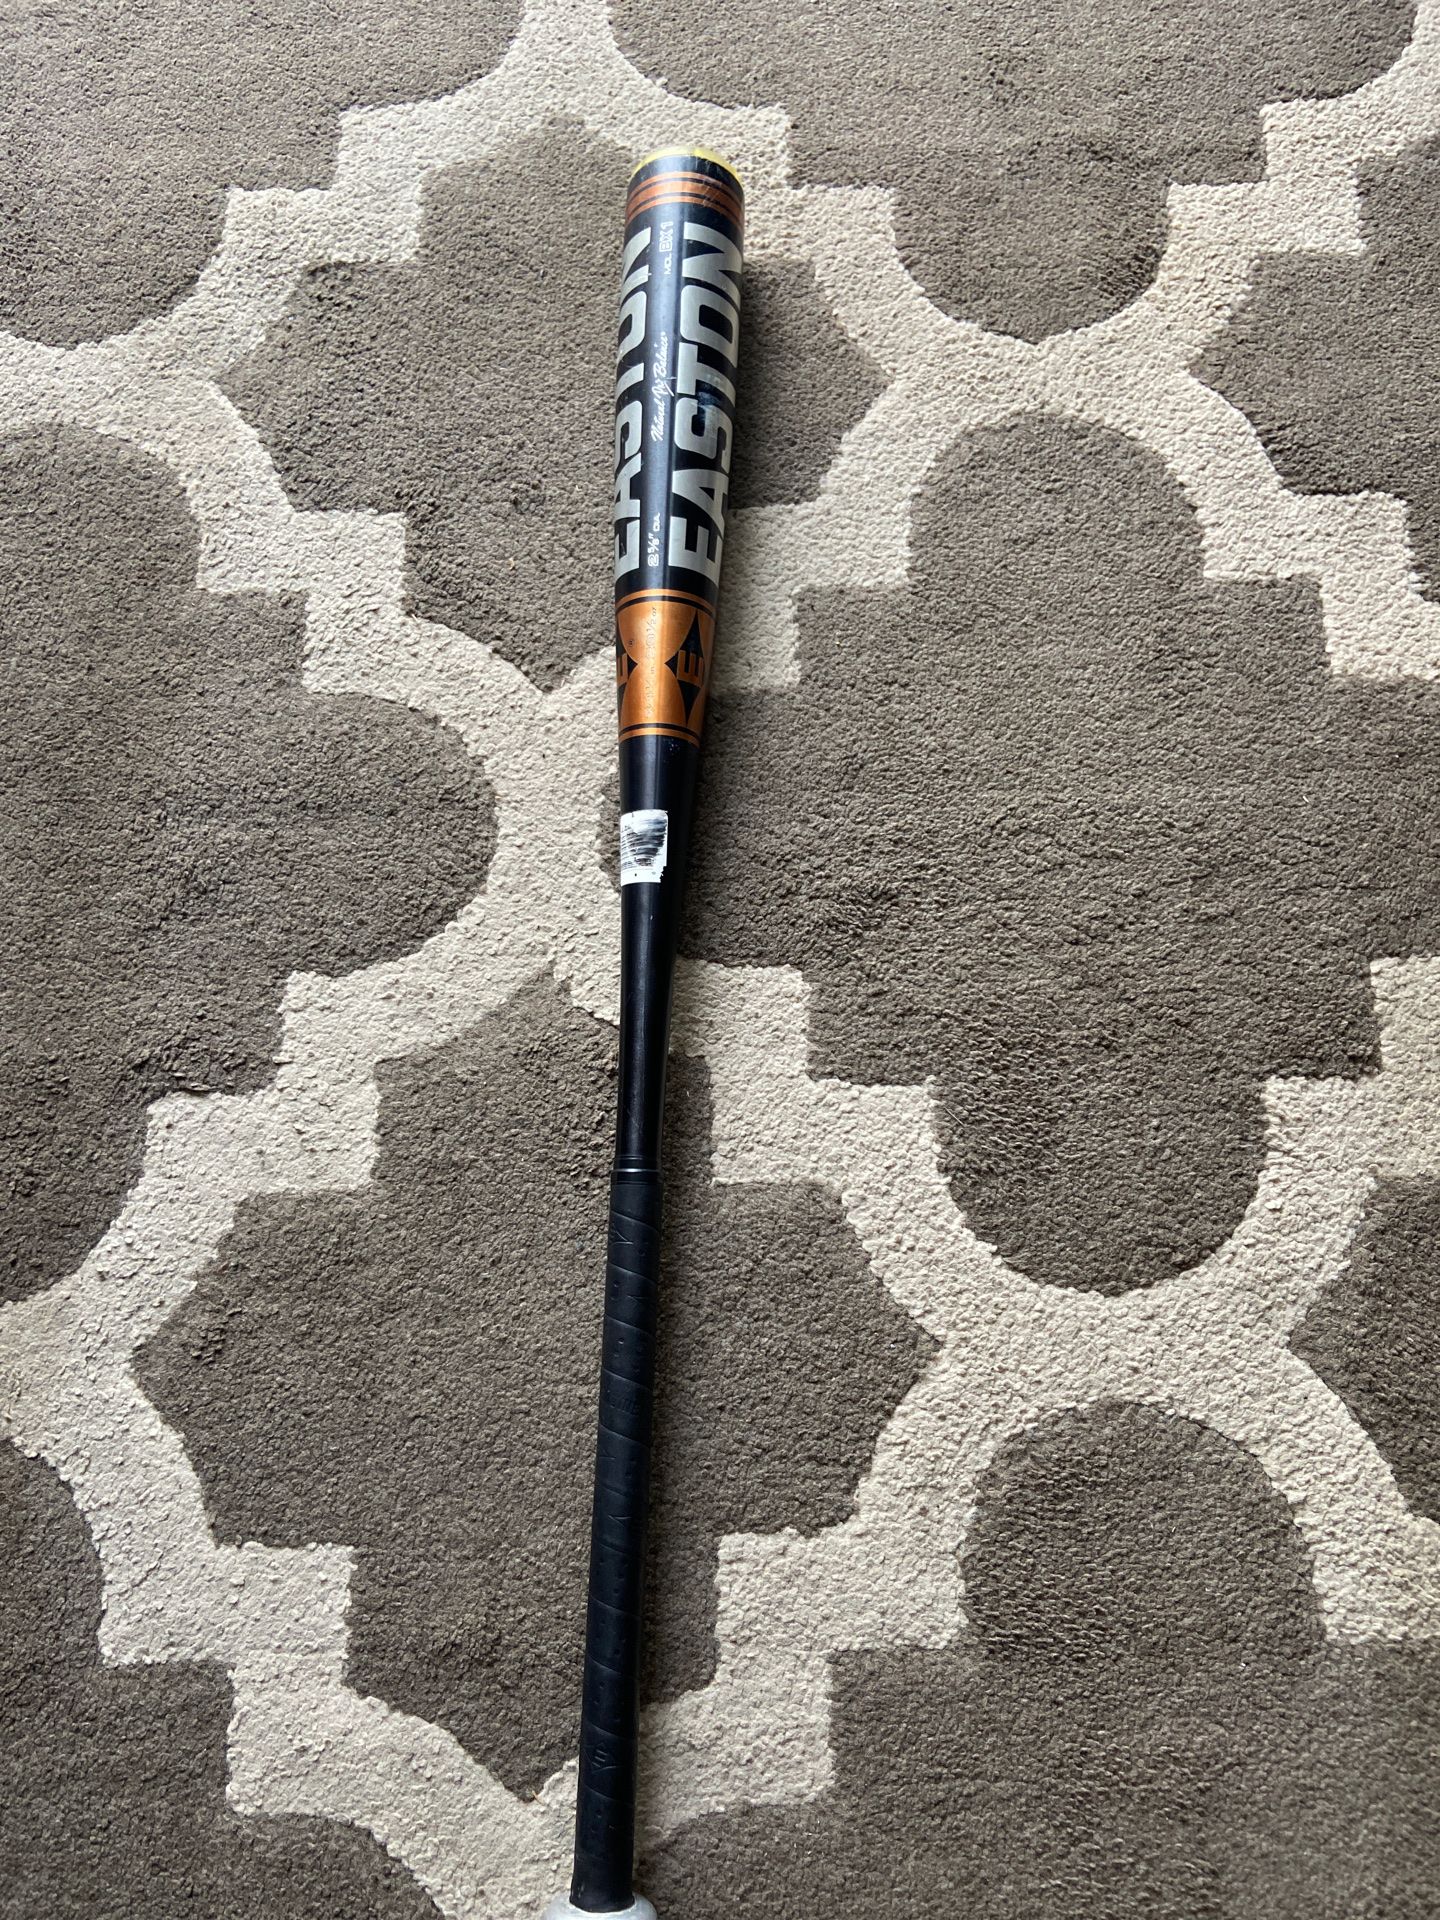 Easton Ultra Light baseball bat size 34 1/2” by 29 1/2oz